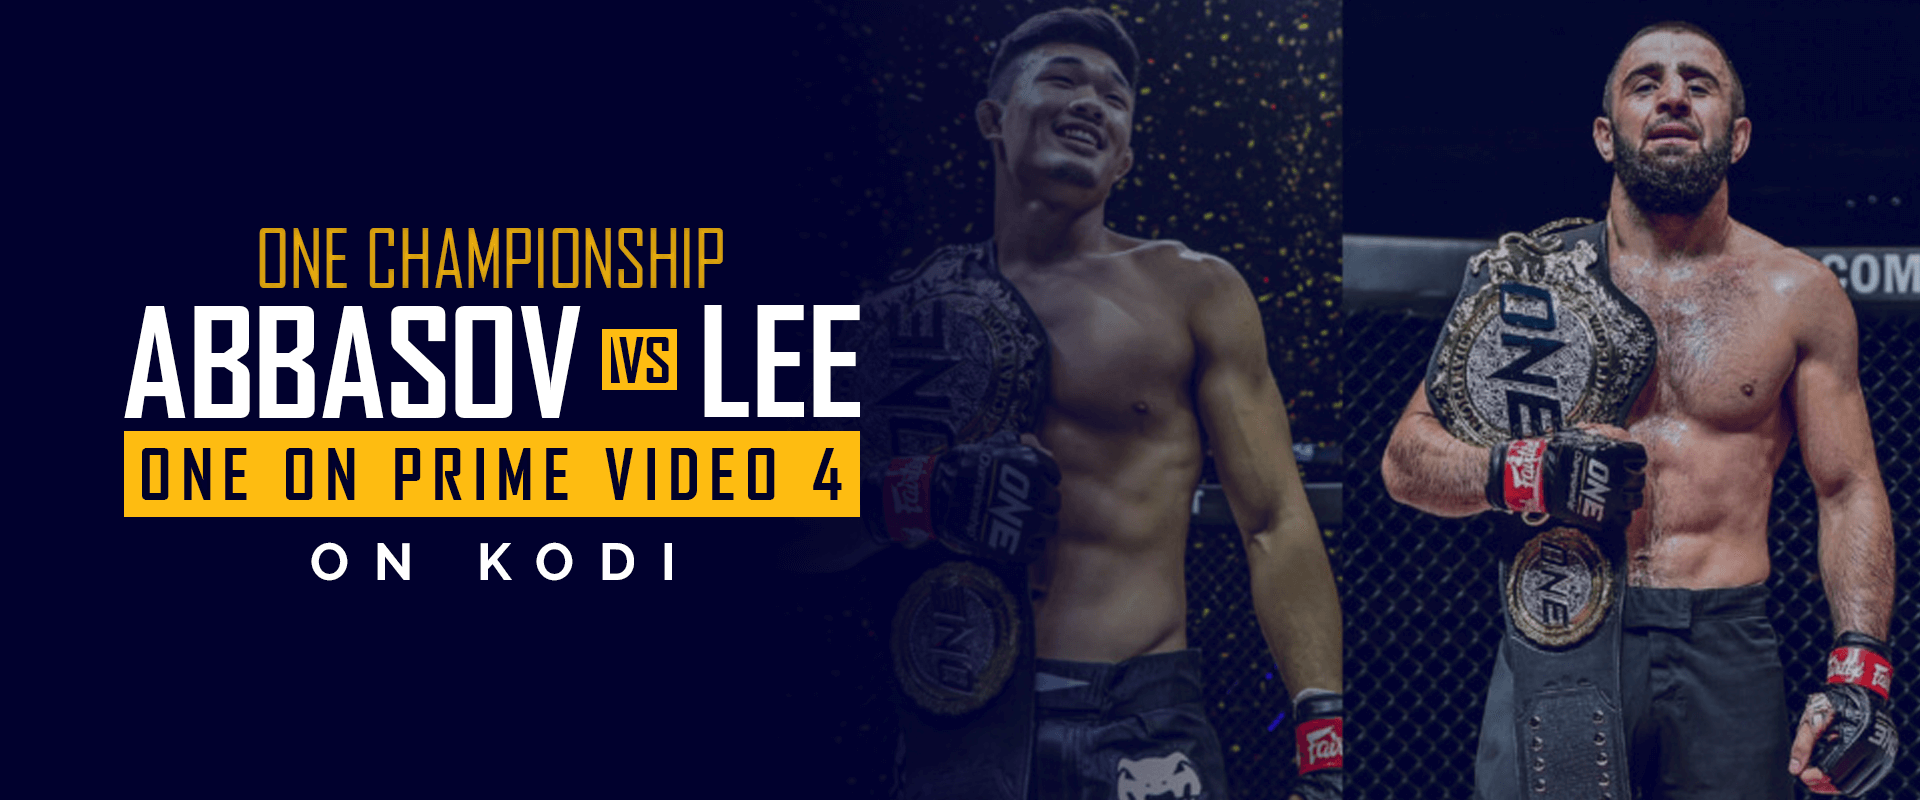 Se One Championship på Kodi- ONE ON PRIME VIDEO 4 - ABBASOV vs LEE